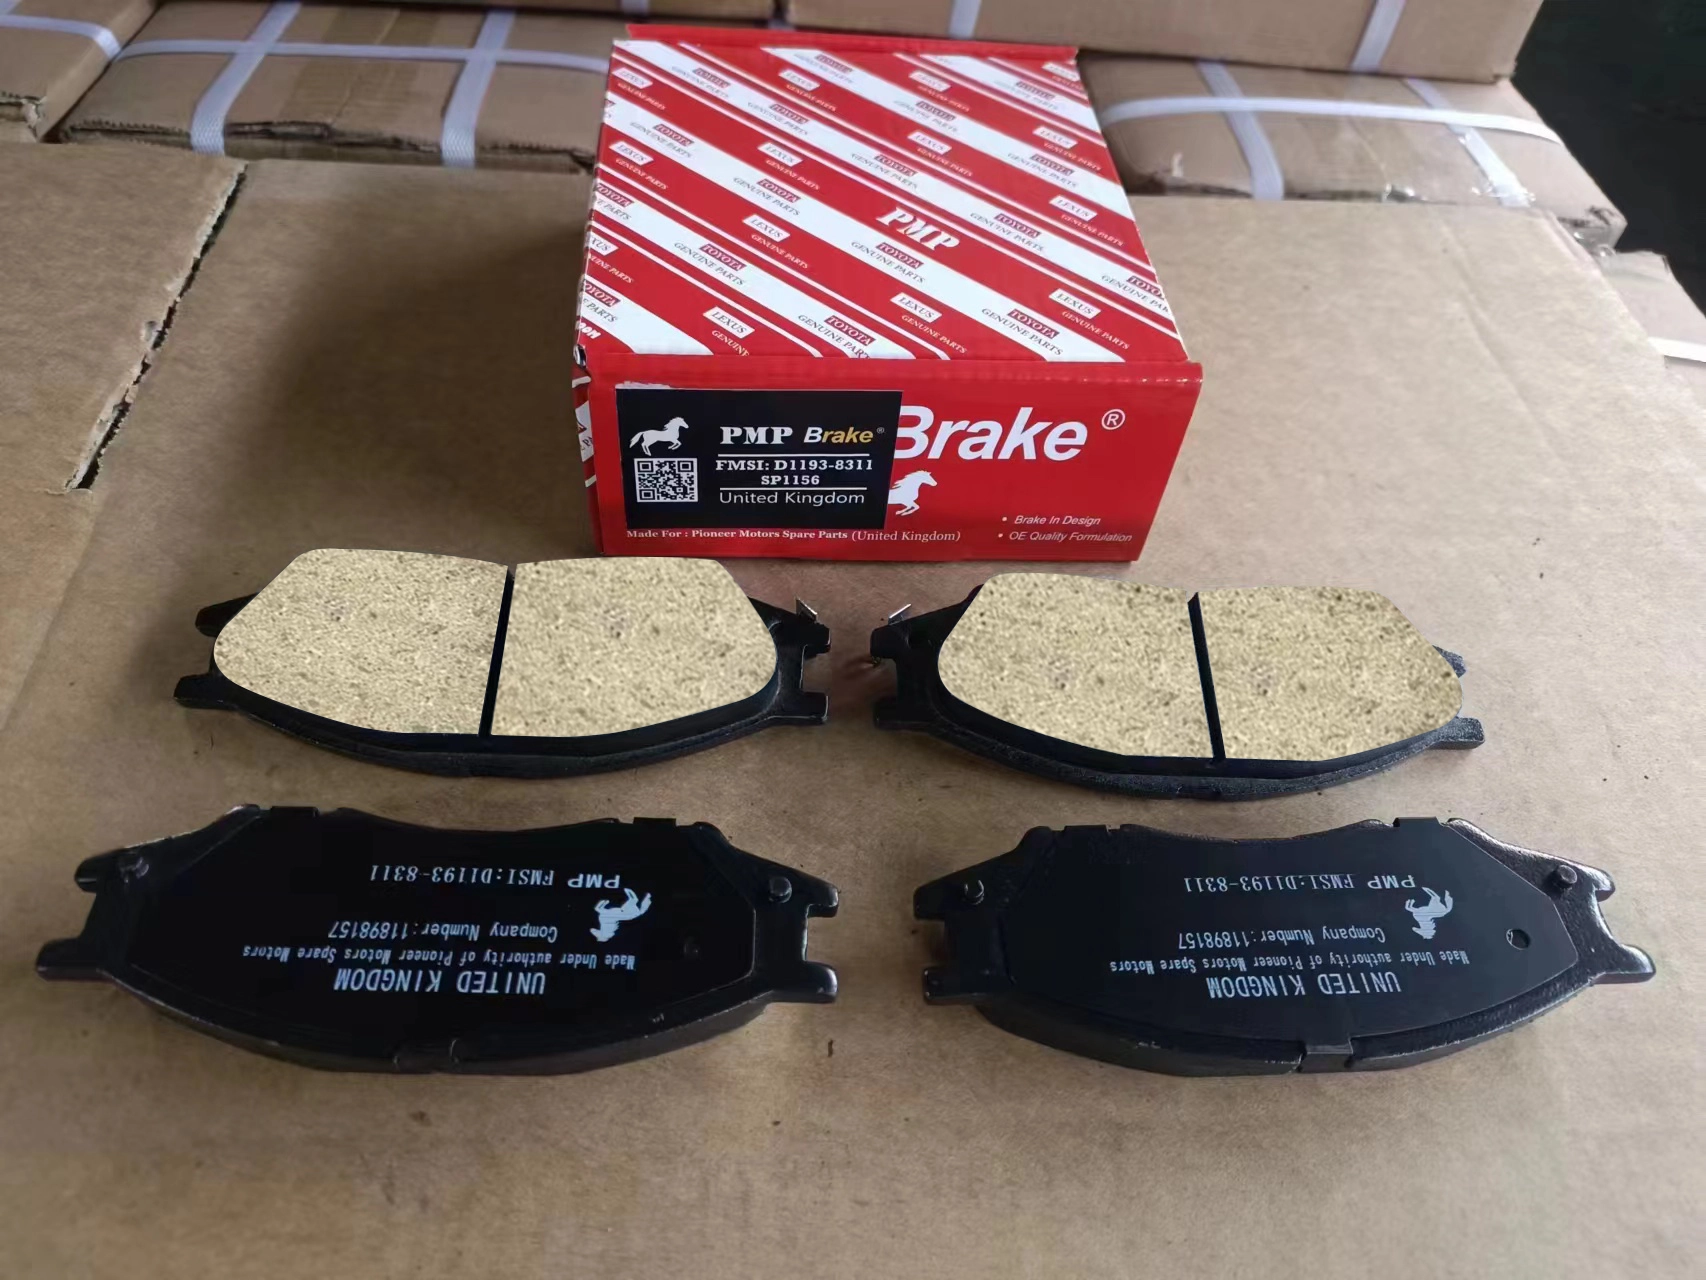 Durable semi metallic brake pads crafted for Toyota Corolla, providing superior braking control.